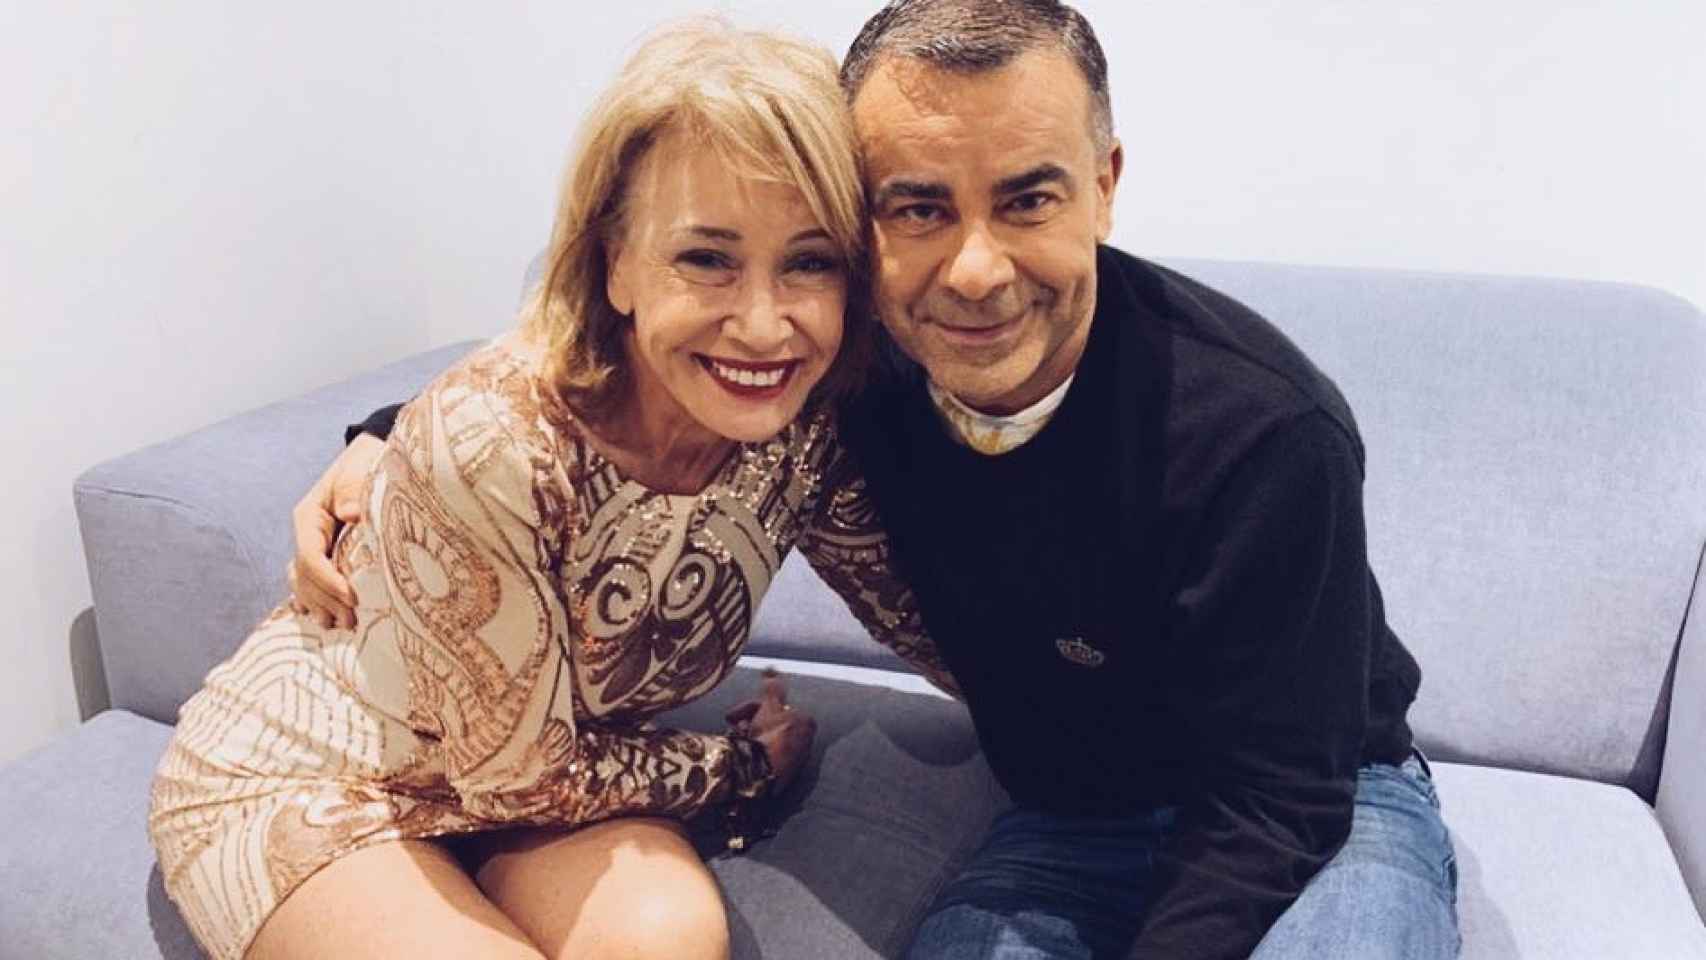 Jorge Javier con Mila Ximénez, en una imagen de su Instagram.